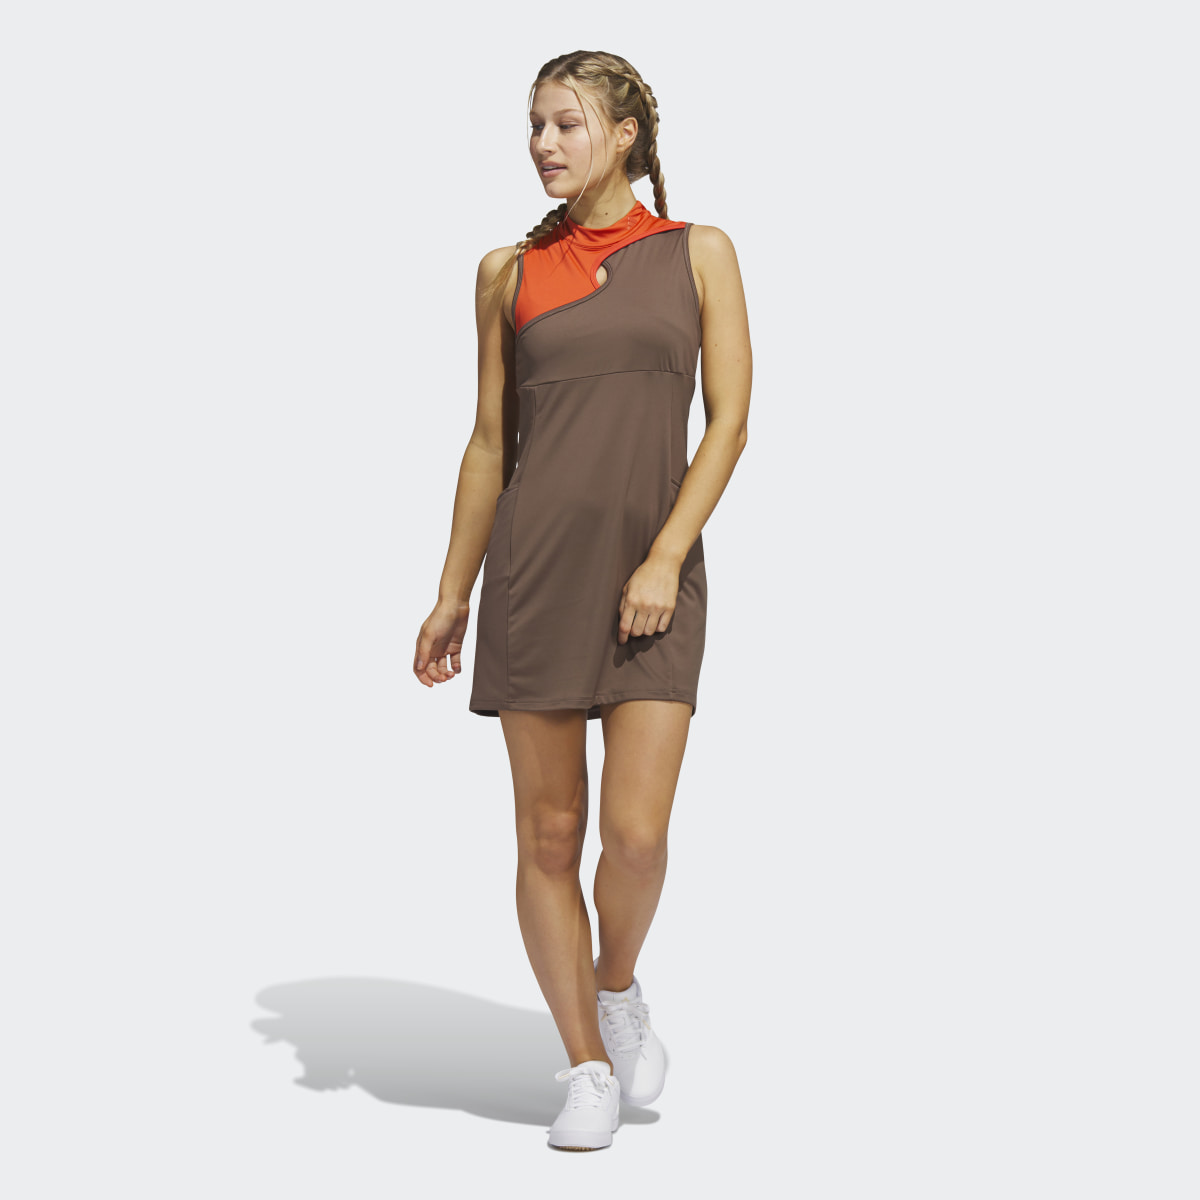 Adidas Ultimate365 Tour Colorblocked Golf Dress. 14